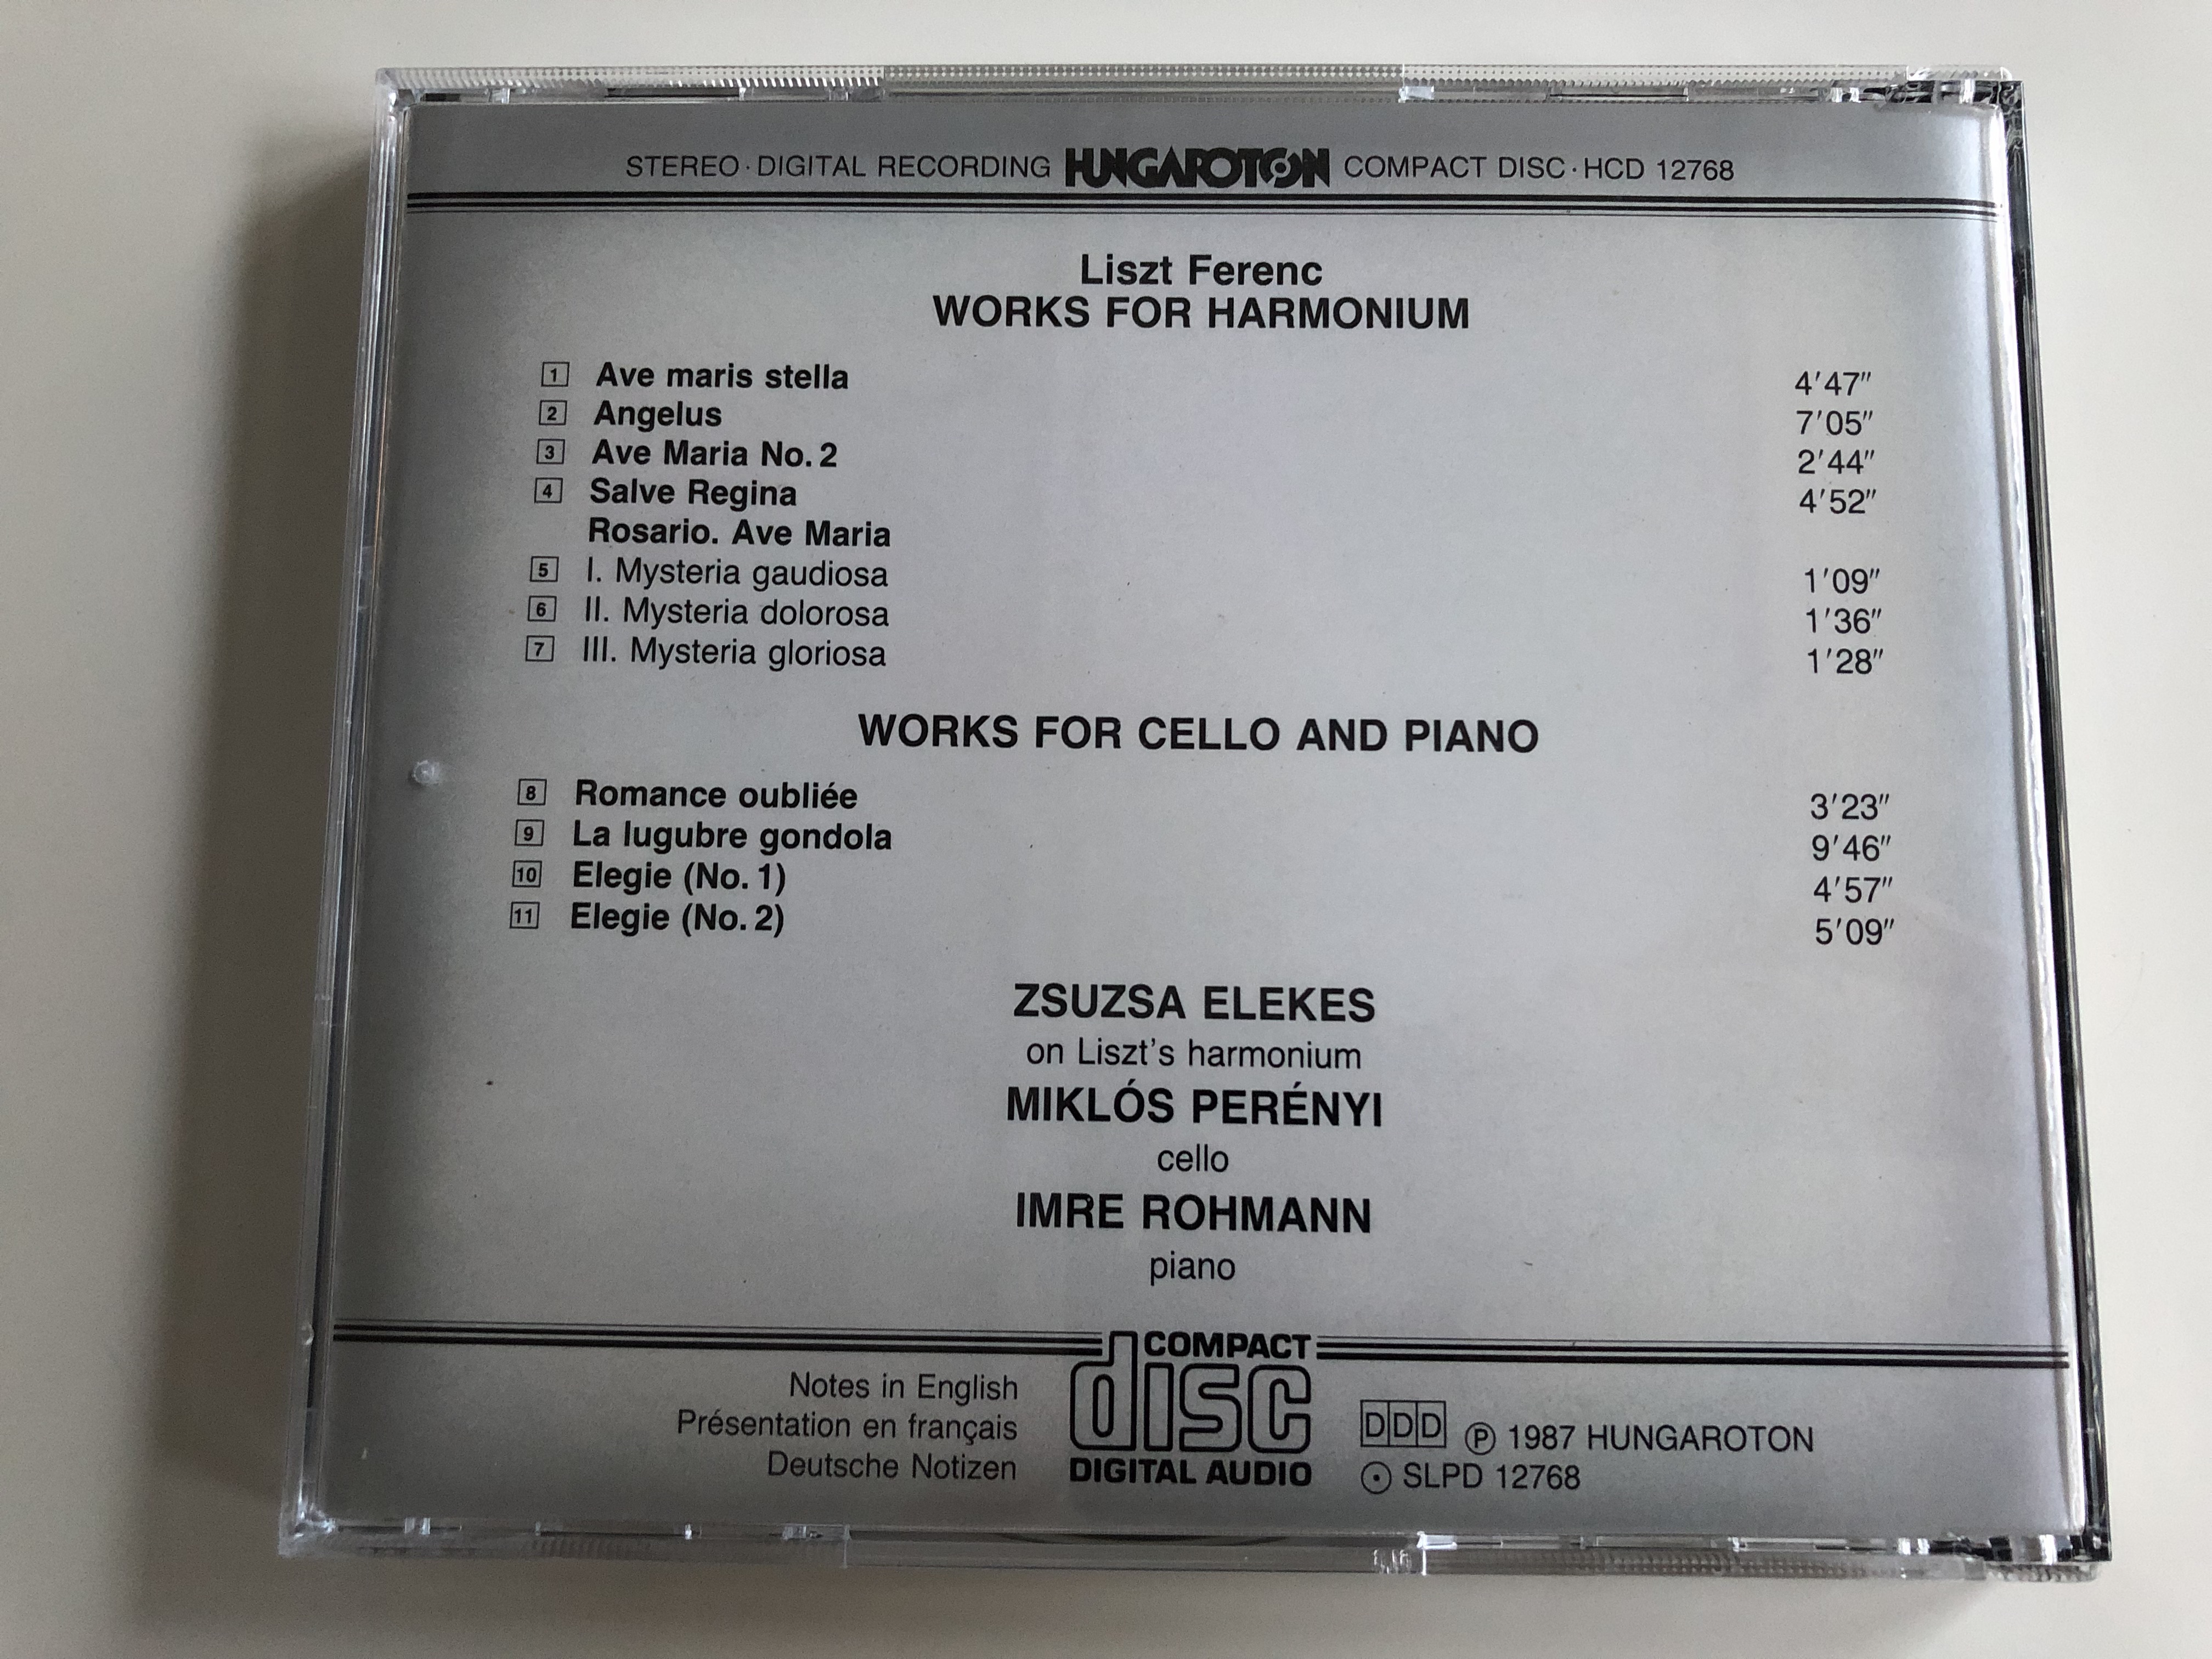 liszt-ferenc-works-for-harmonium-works-for-cello-and-piano-zsuza-elekes-on-liszt-s-harmonium-mikl-s-per-nyi-imre-rohmann-hungaroton-audio-cd-1987-hcd-12768-7-.jpg